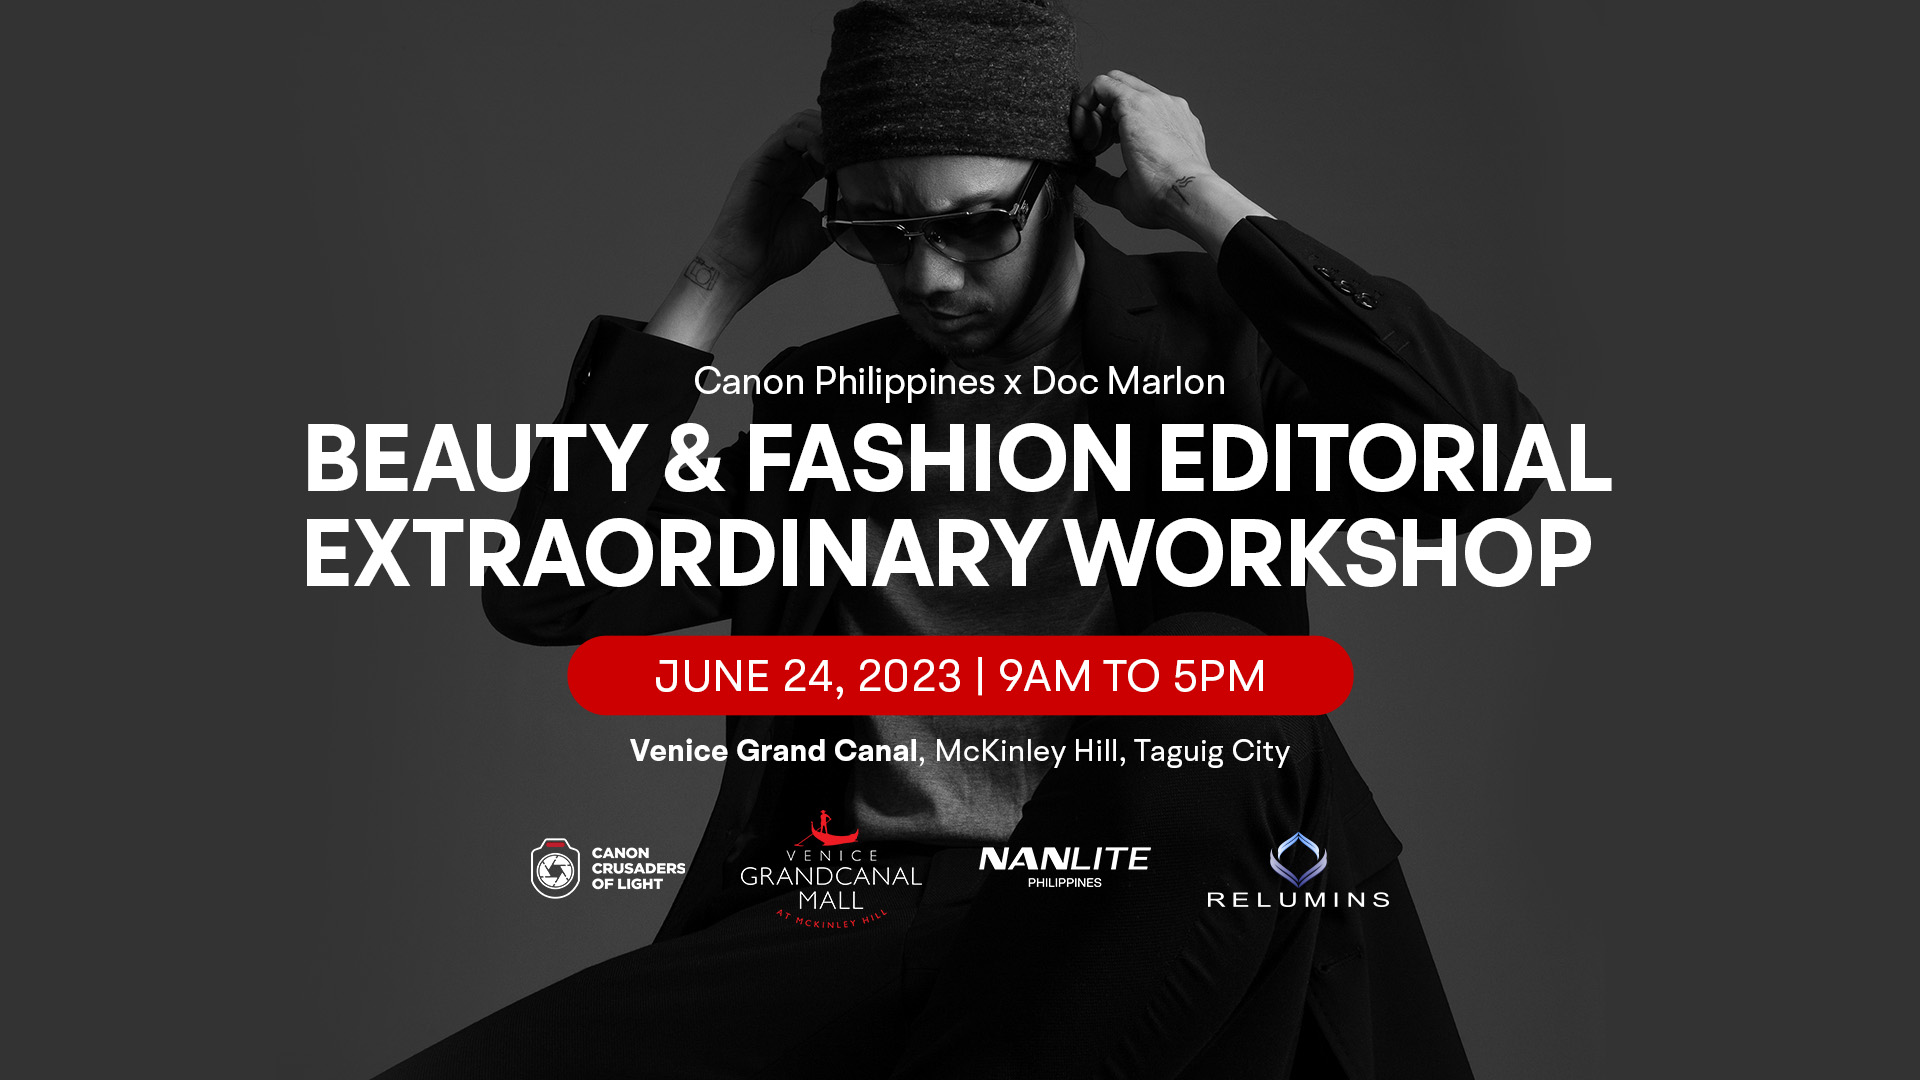 Beauty & Fashion Editorial Extraordinary Workshop with Doc Marlon